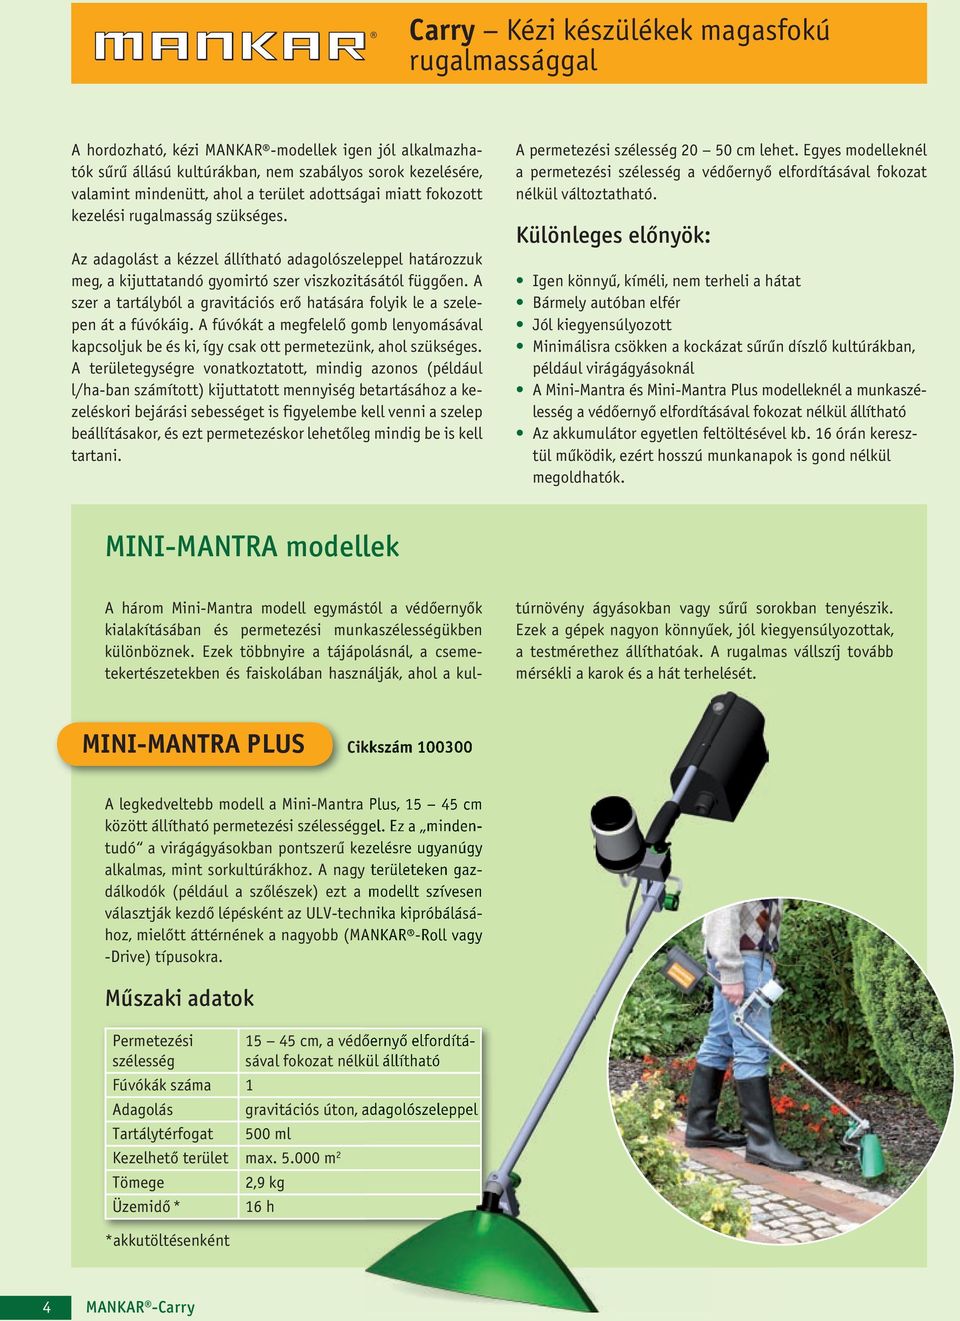 ULV herbicidkijuttató gépek - PDF Free Download